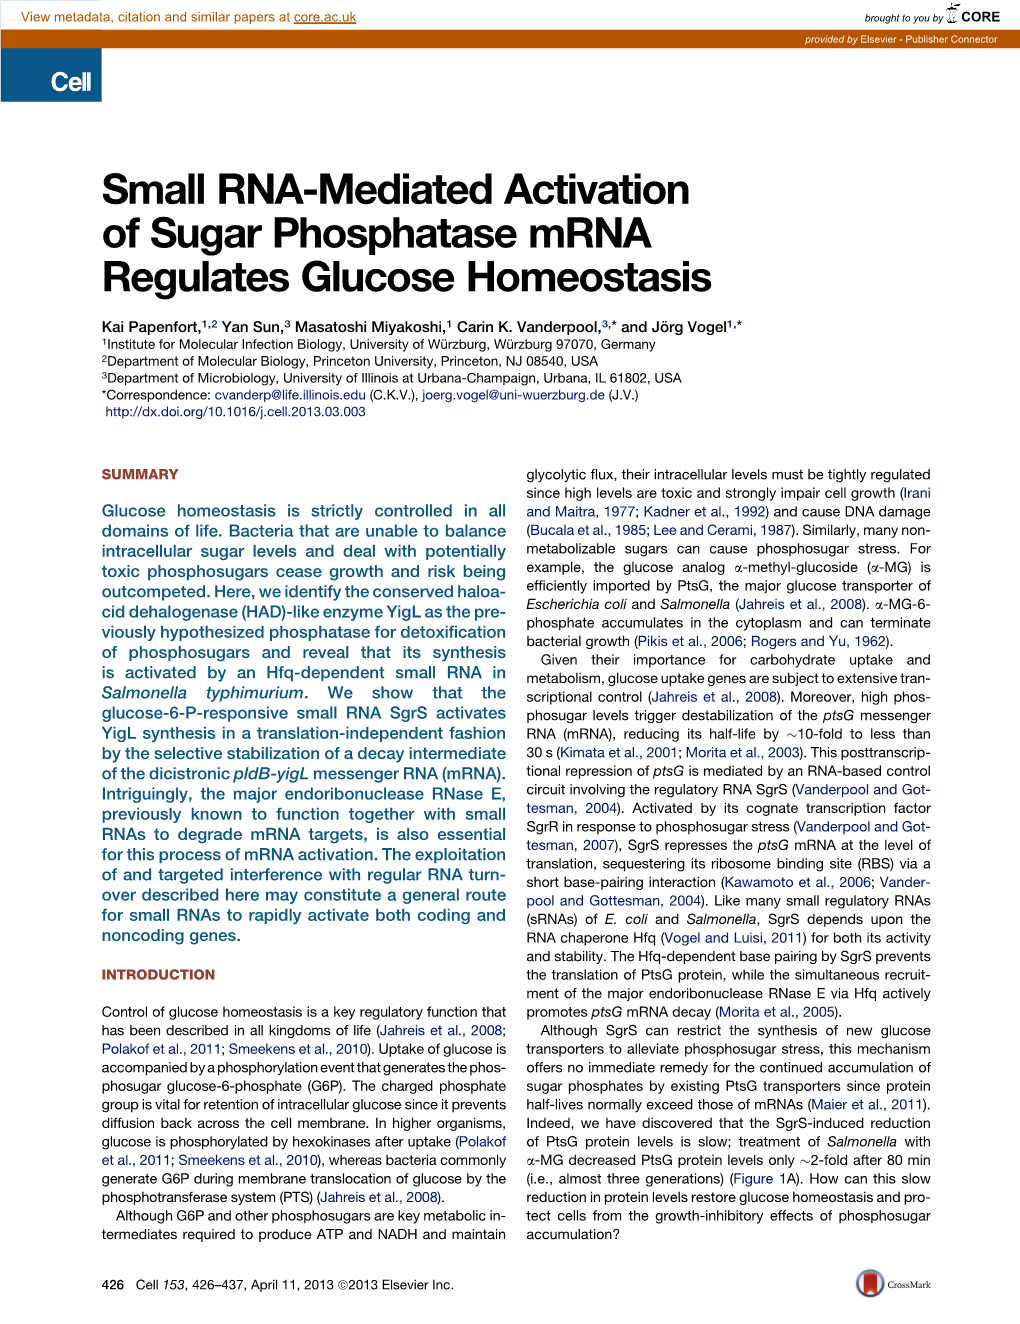 Small RNA-Mediated Activation of Sugar Phosphatase Mrna Regulates Glucose Homeostasis